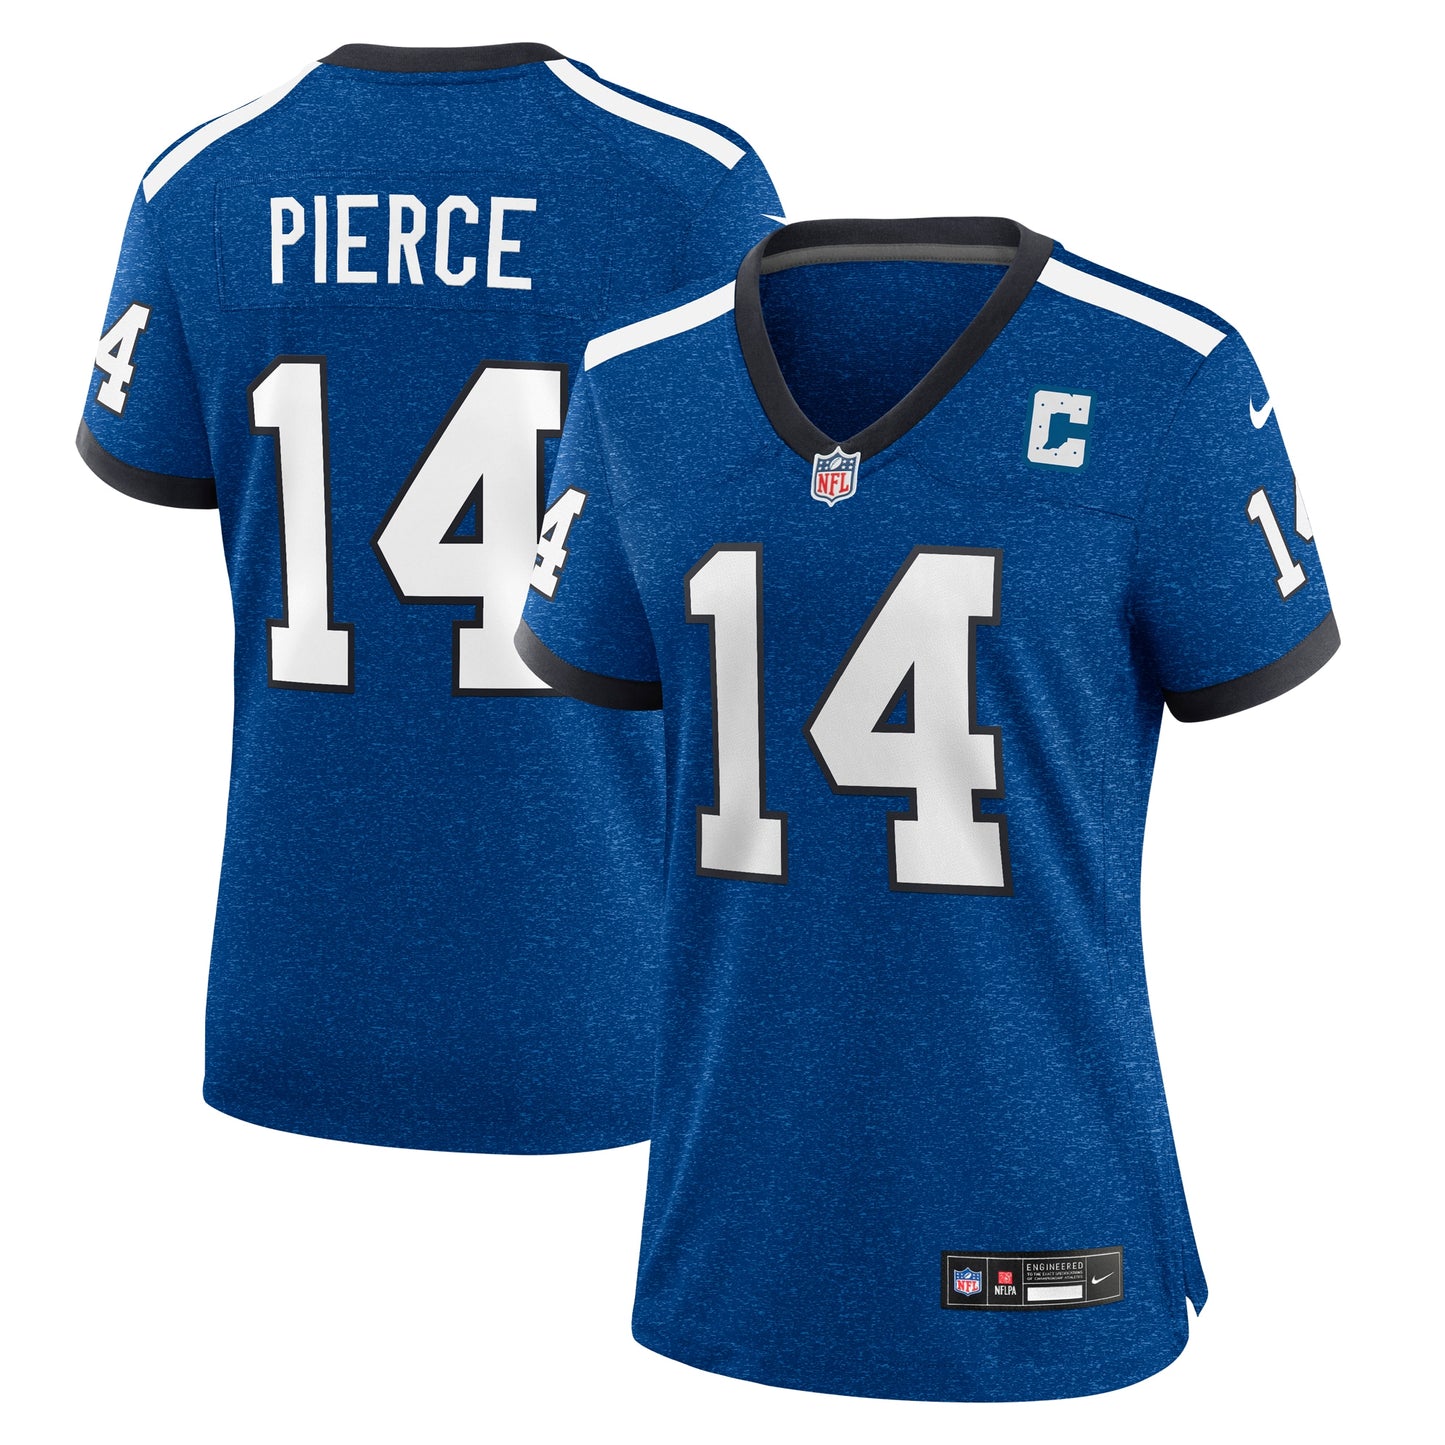 Alec Pierce Indianapolis Colts Nike Women's Indiana Nights Alternate Game Jersey - Royal